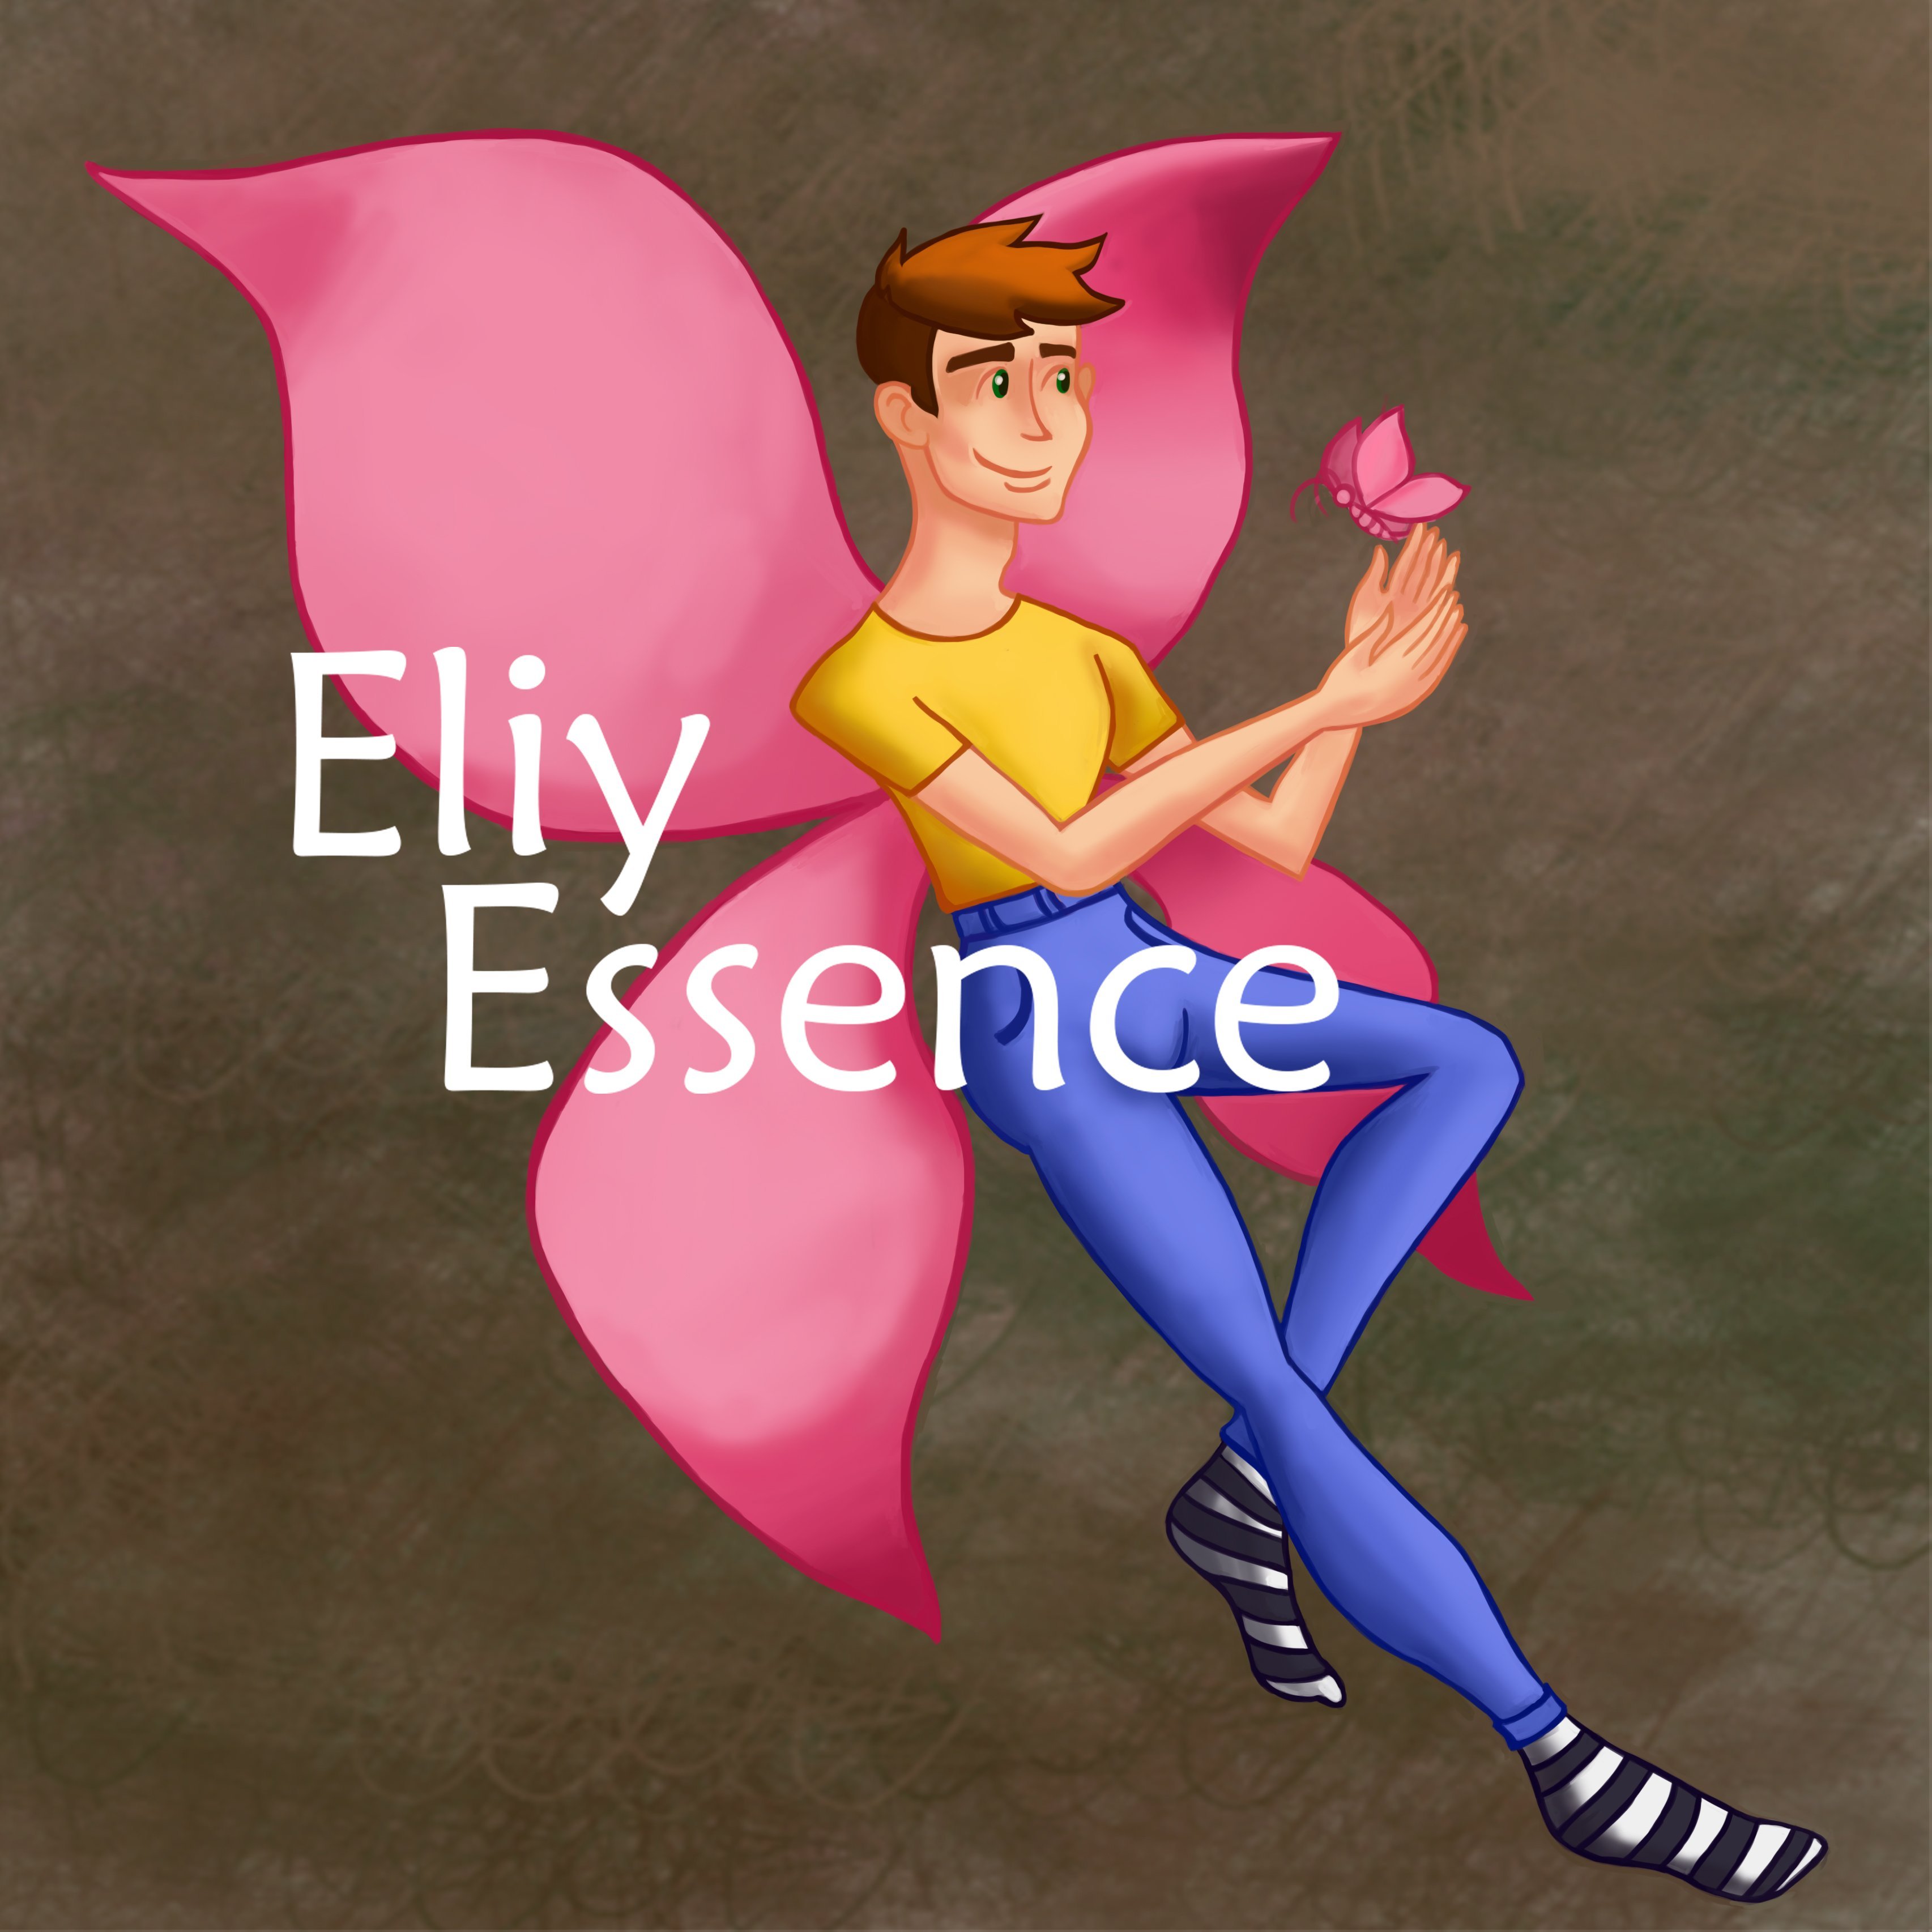 Eliy Essence 🏳️‍🌈🌈さんのプロフィール画像